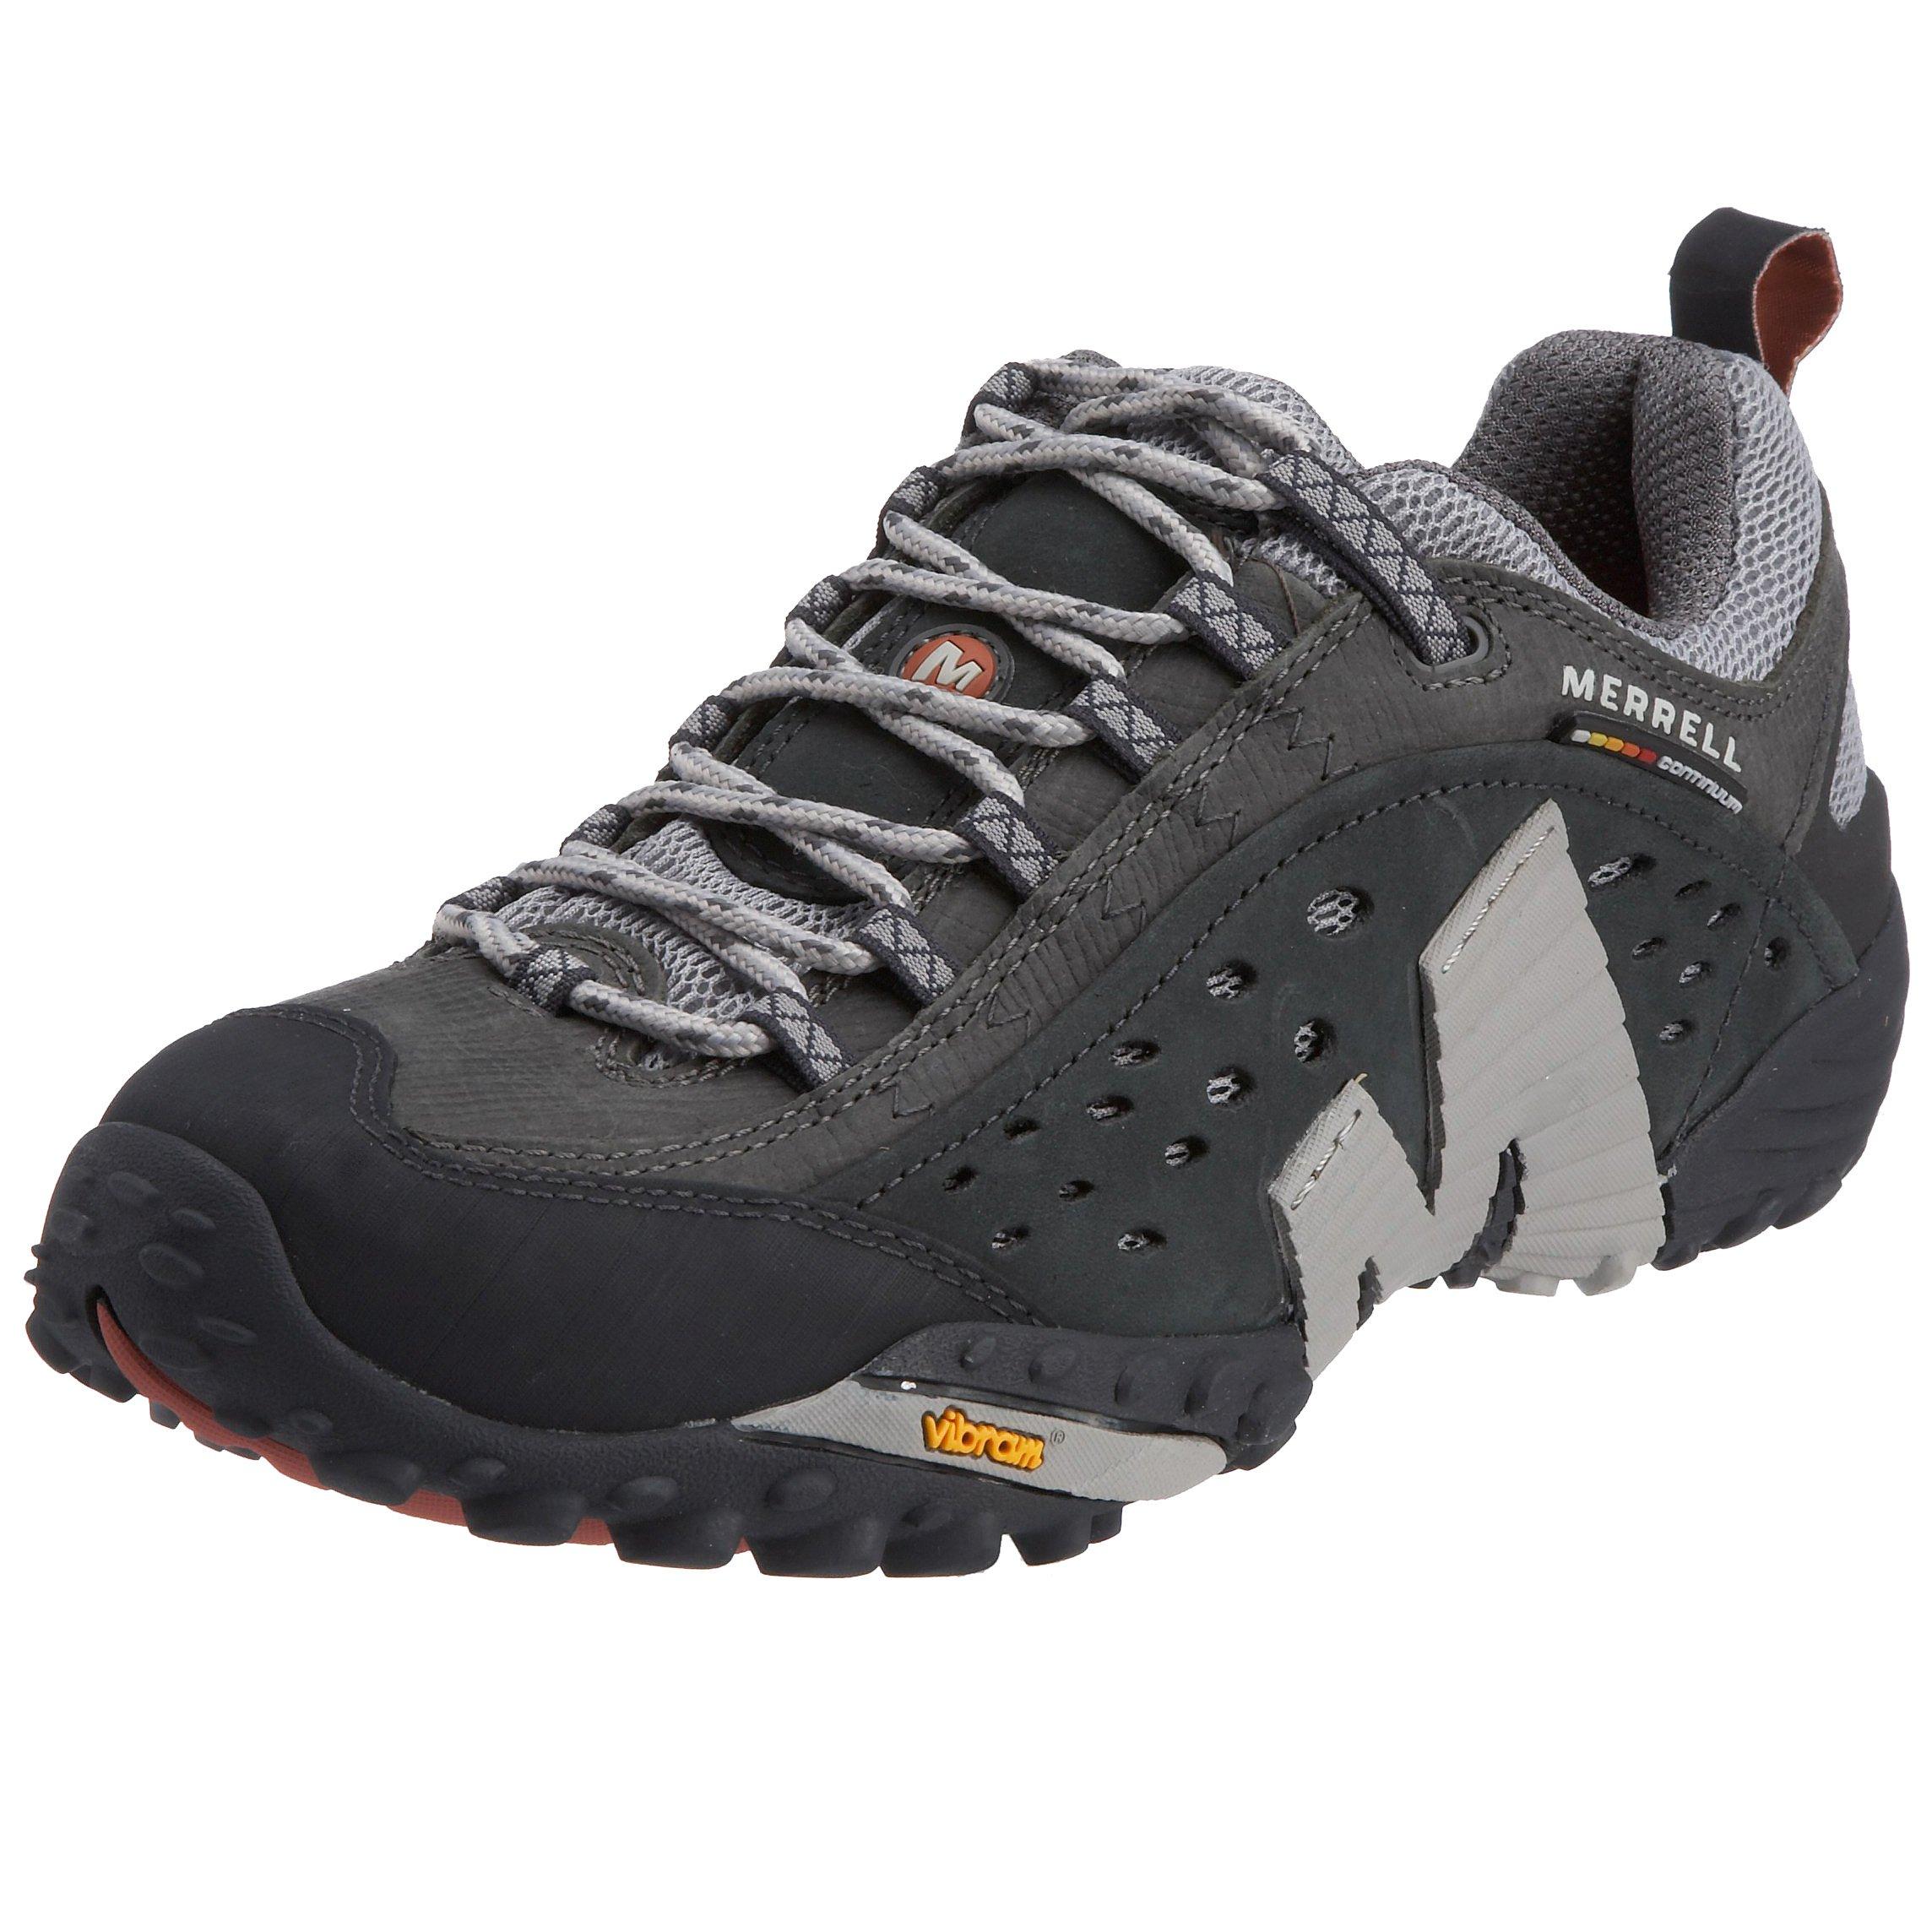 MERRELL Intercept J73785 Outdoor Hiking Trekking Trainers Athletic Shoes Mens 